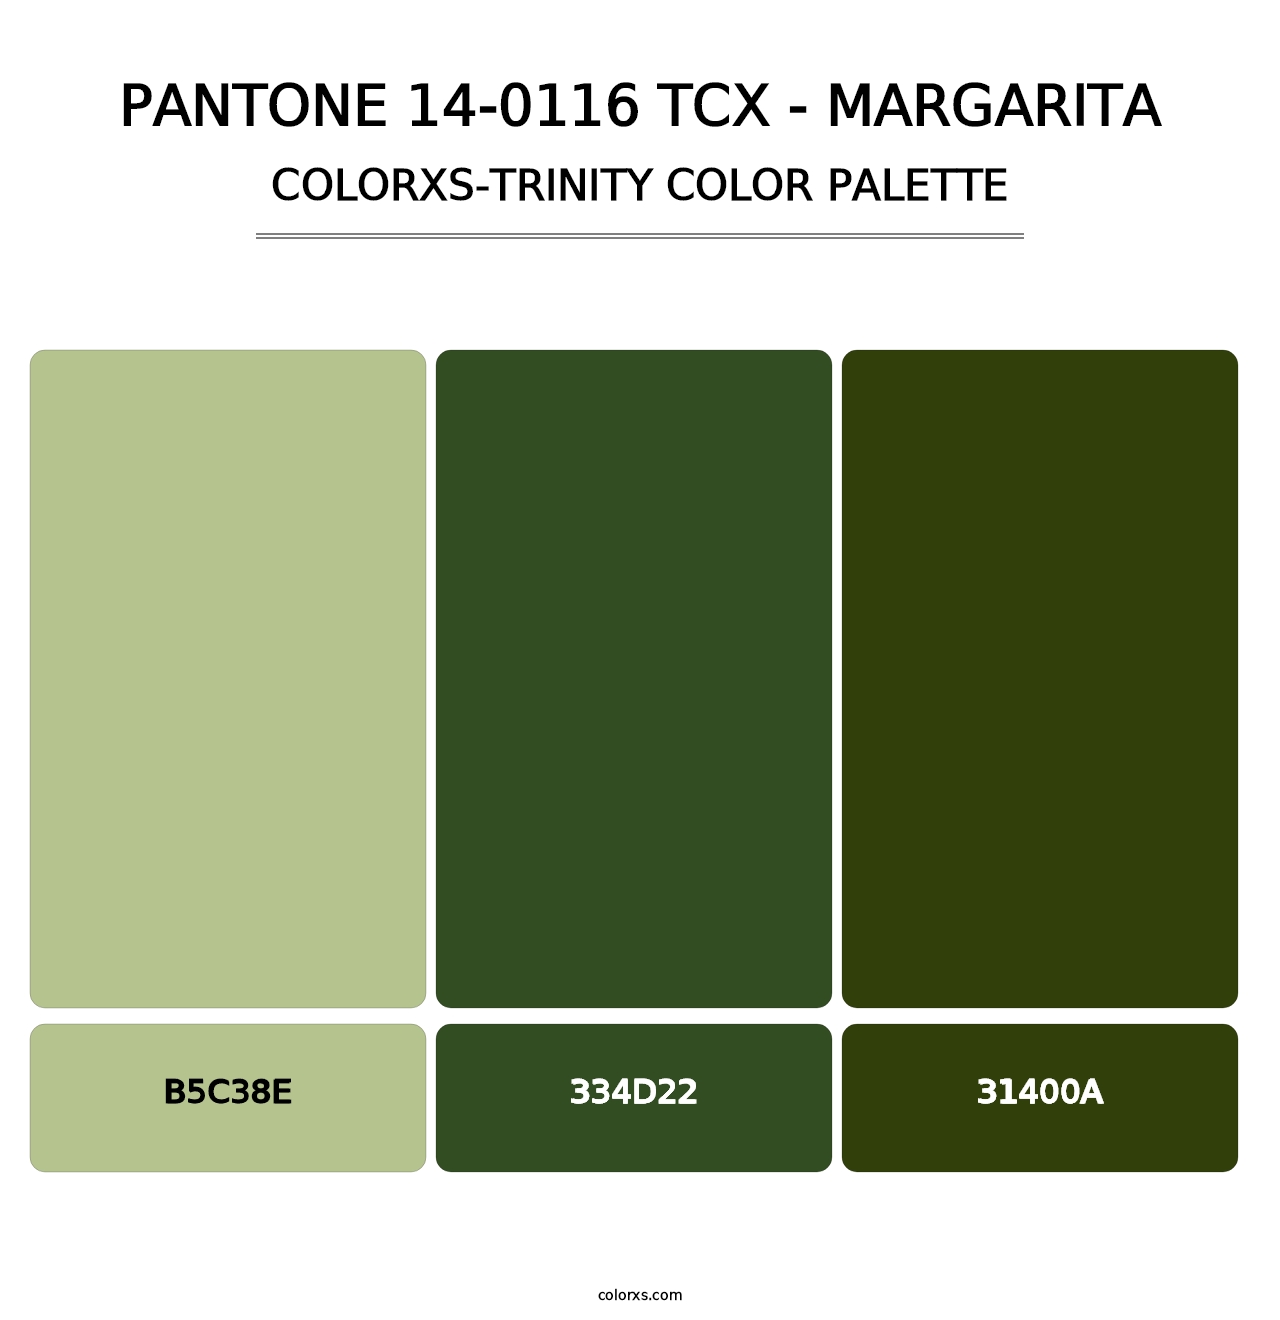 PANTONE 14-0116 TCX - Margarita - Colorxs Trinity Palette